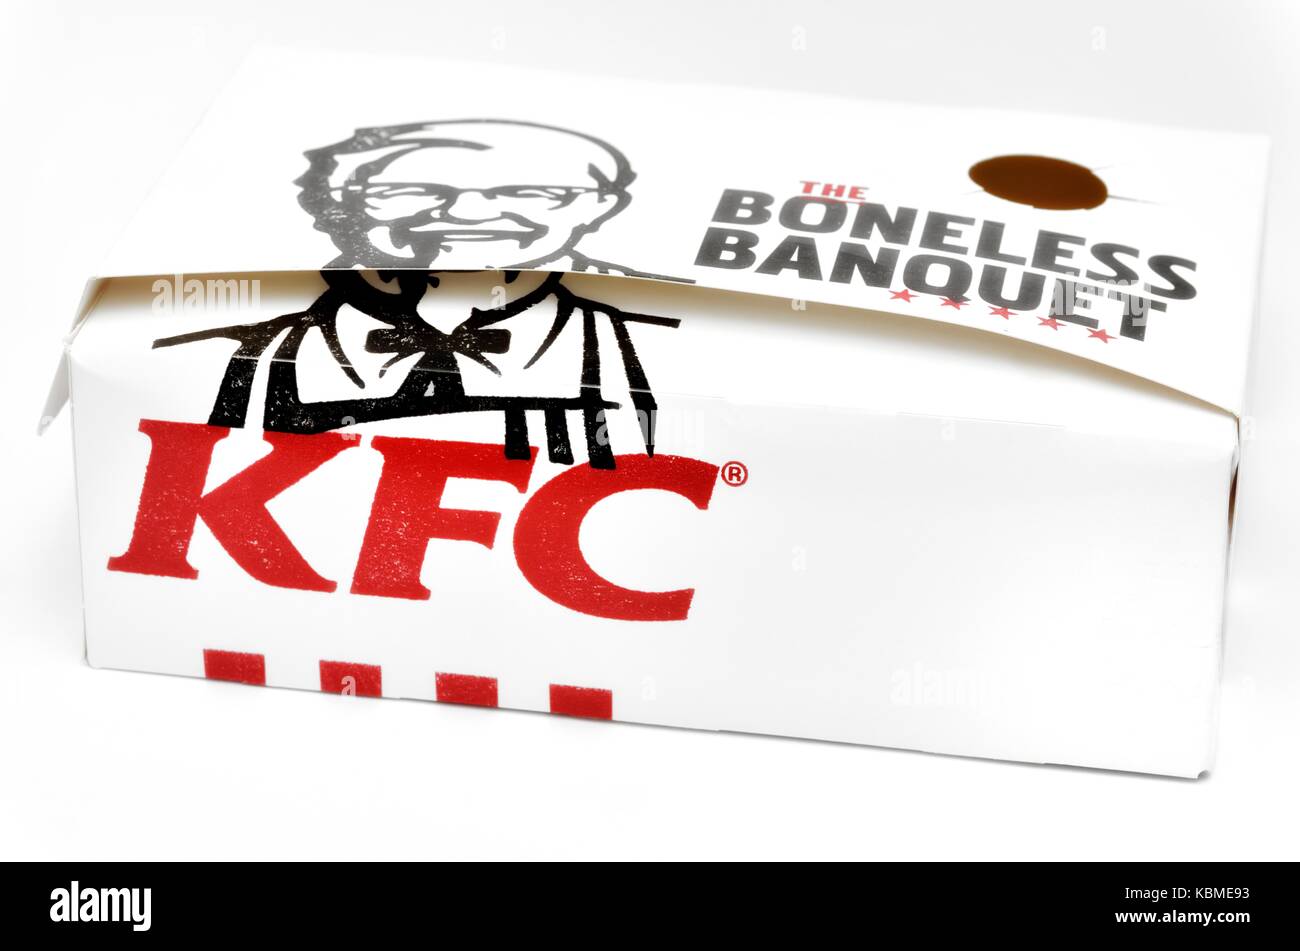 KFC Boneless Banquet box Stock Photo